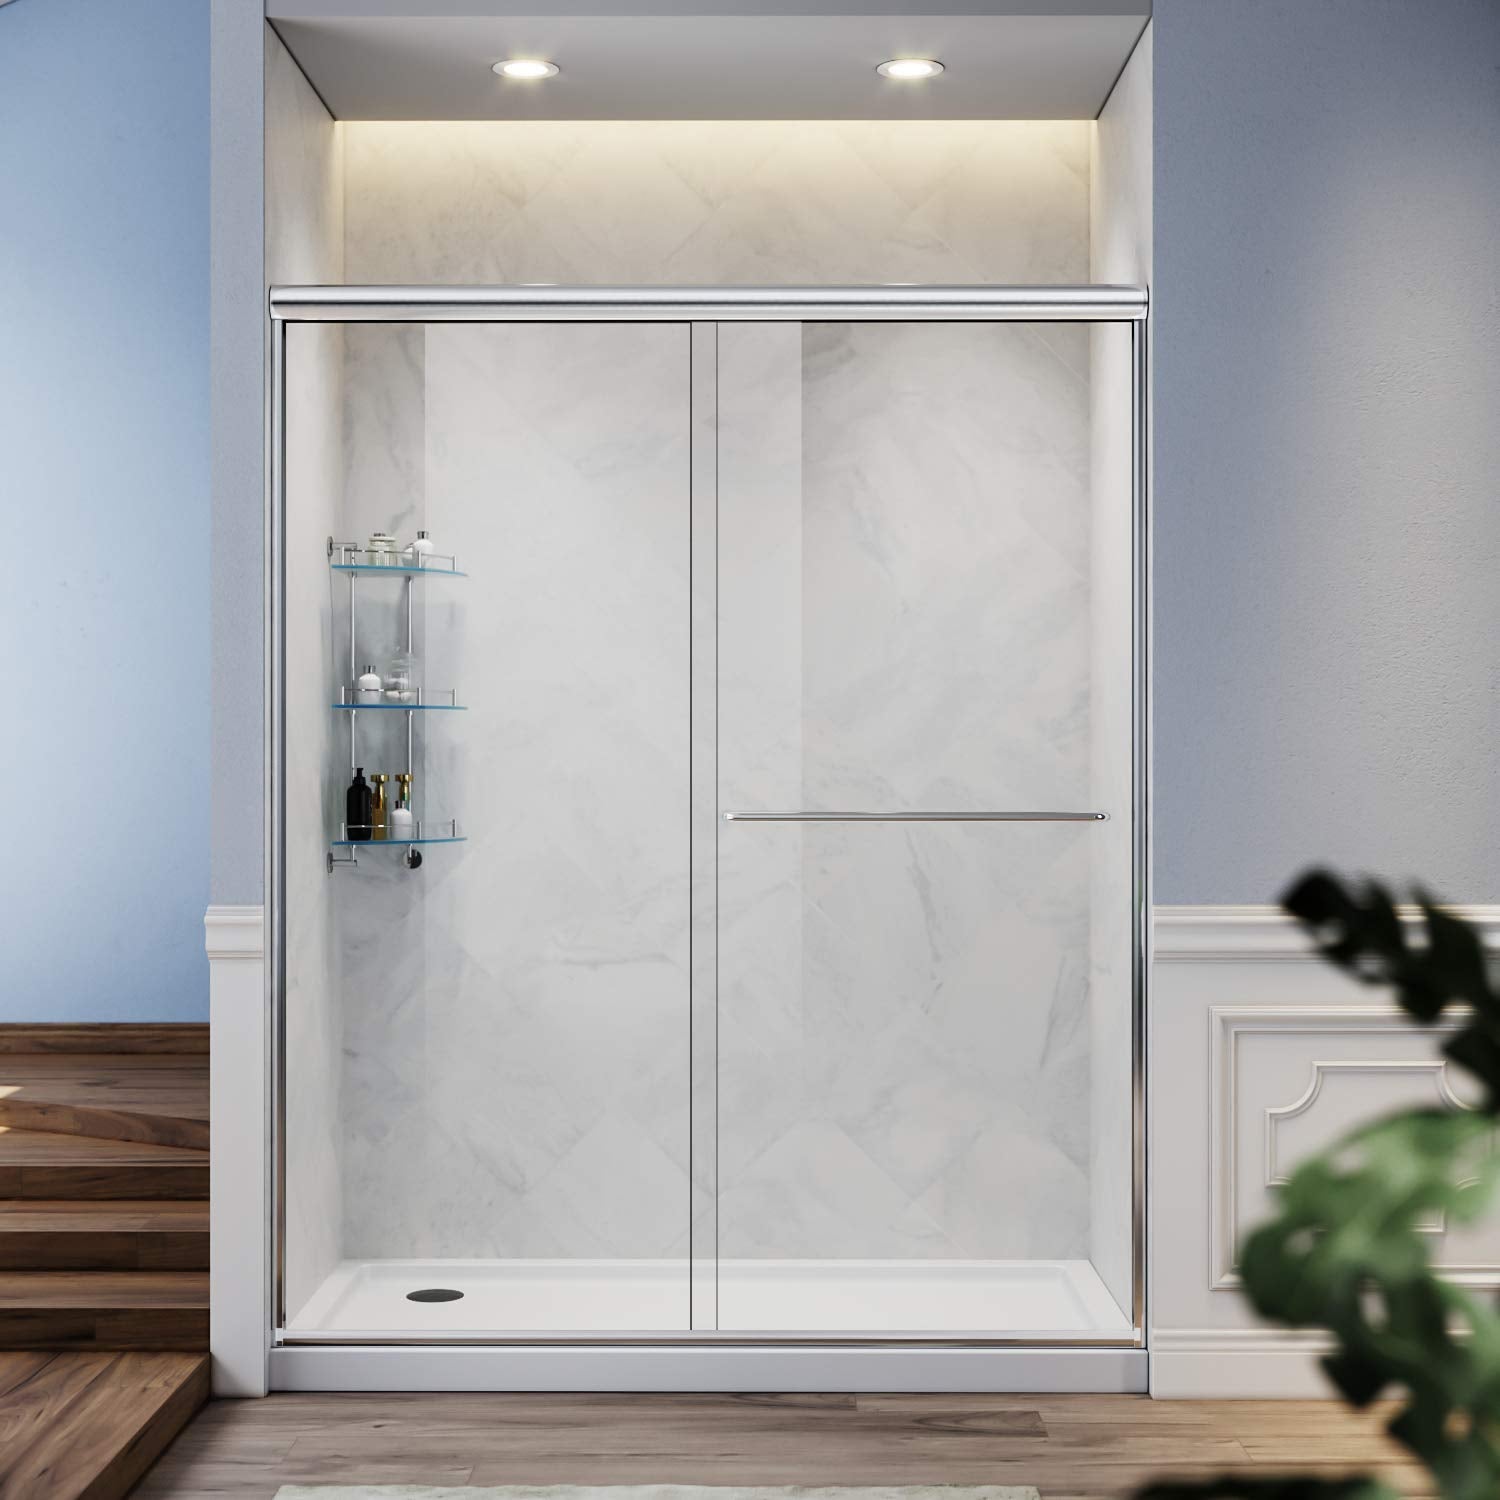 Popular Water Repellent Bathtub Glass Doors Walk in Shower Enclosure -  China Shower Enclosure, Shower Screen